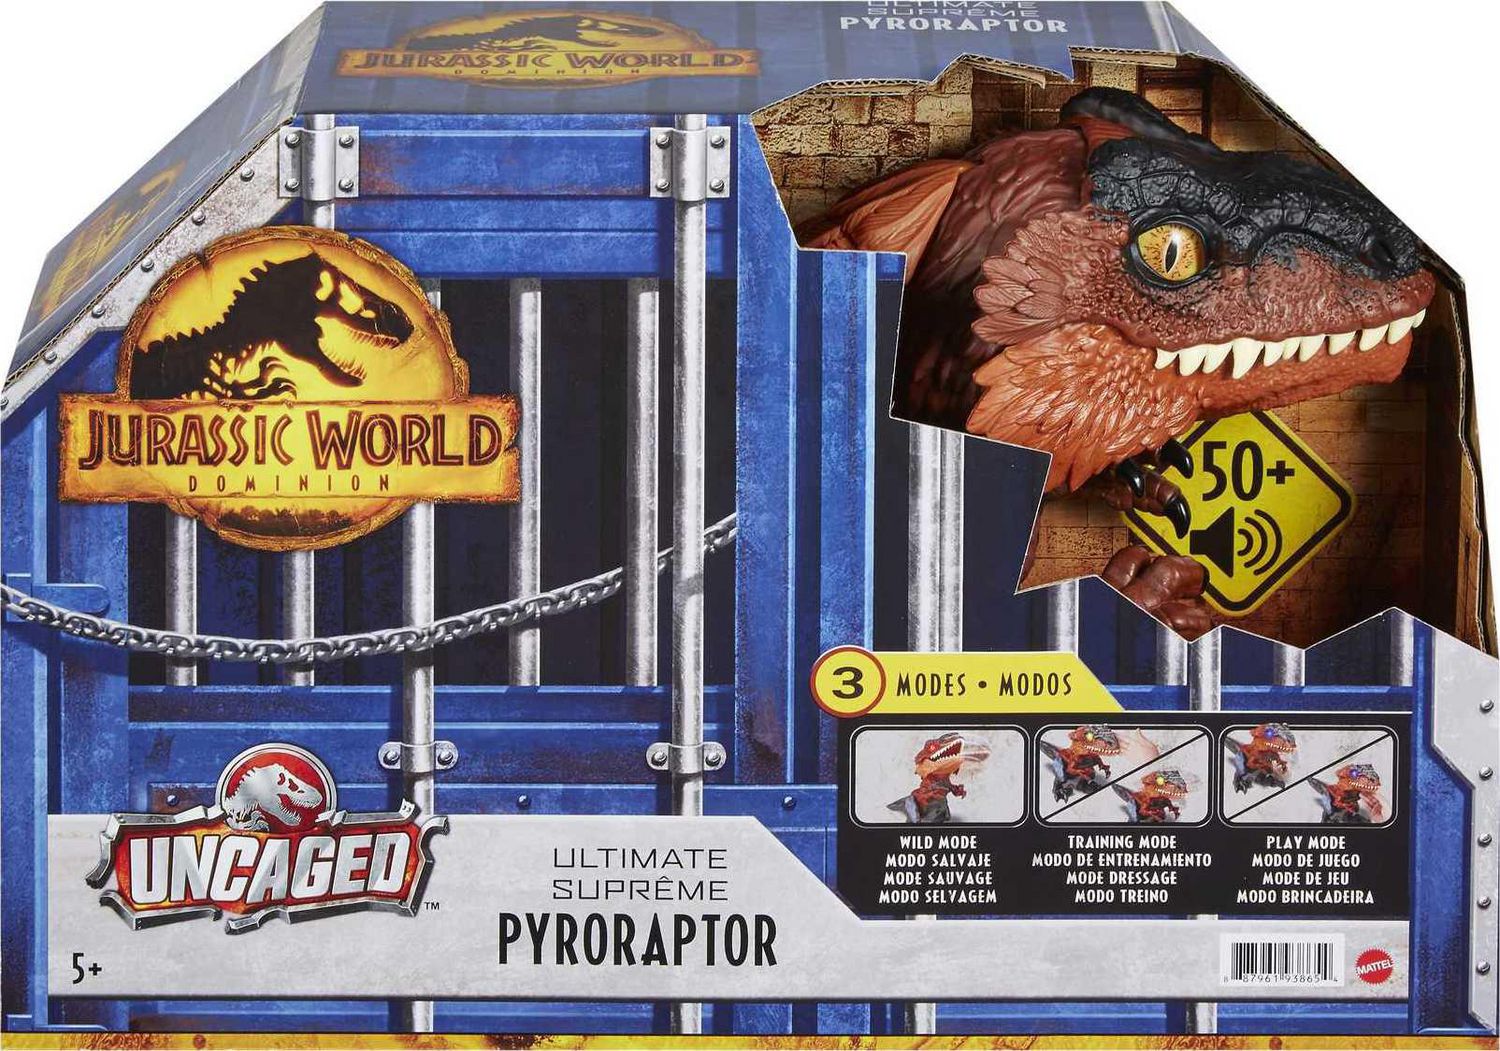 Jurassic World: Dominion Uncaged Ultimate Pyroraptor Interactive